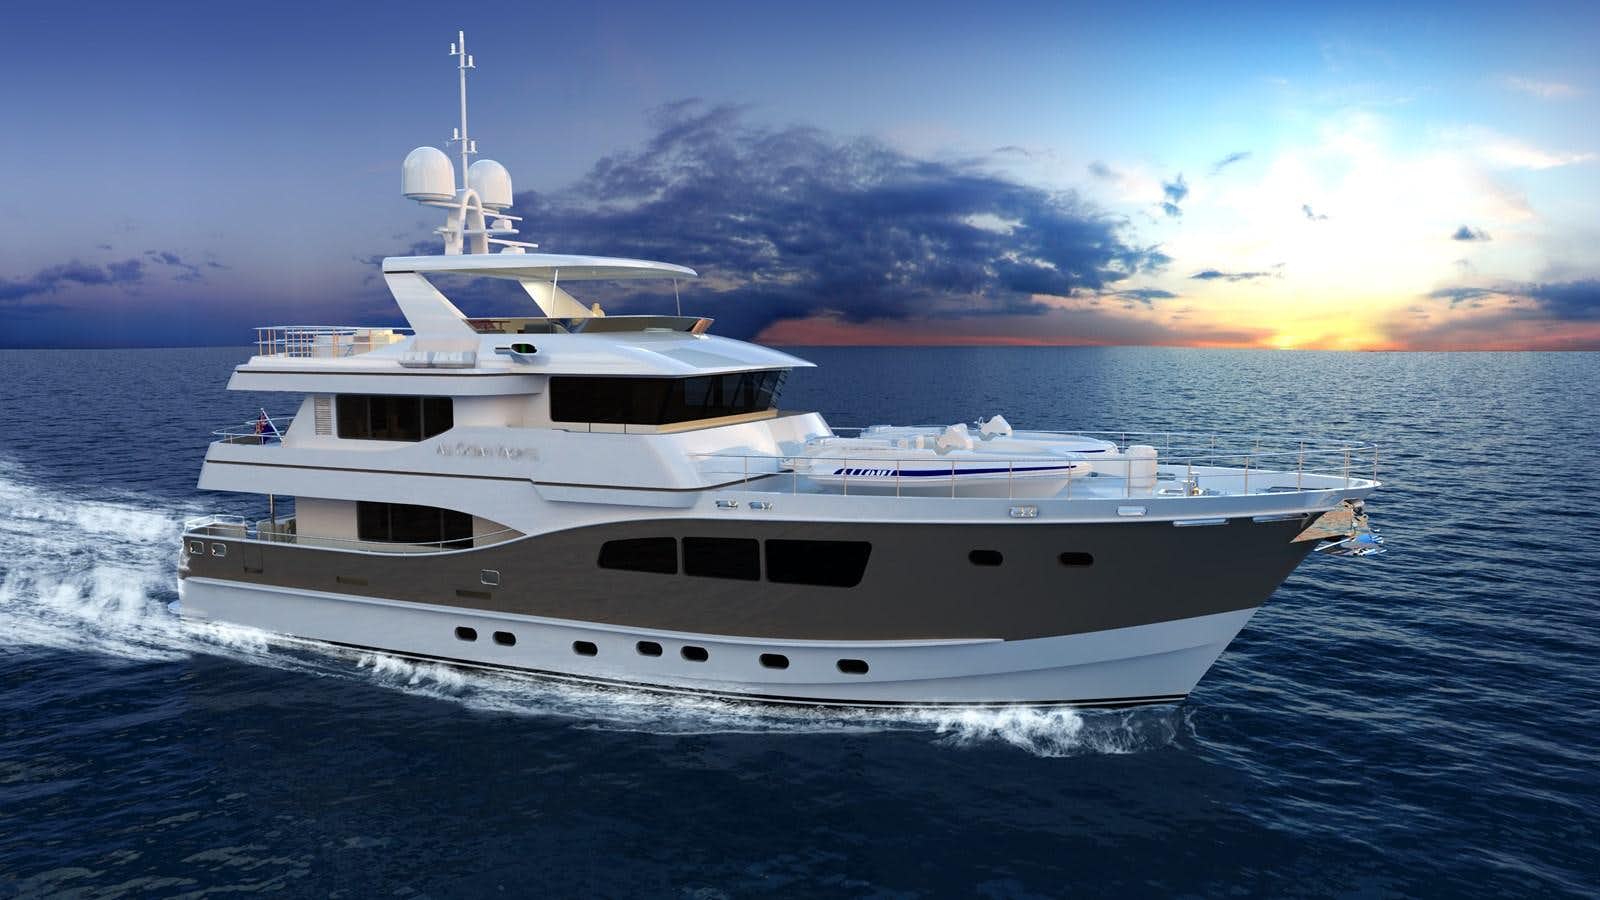 ALL OCEAN YACHTS 90′ STEEL Yacht for Sale is a 90' All Ocean Yachts Motor  Yacht